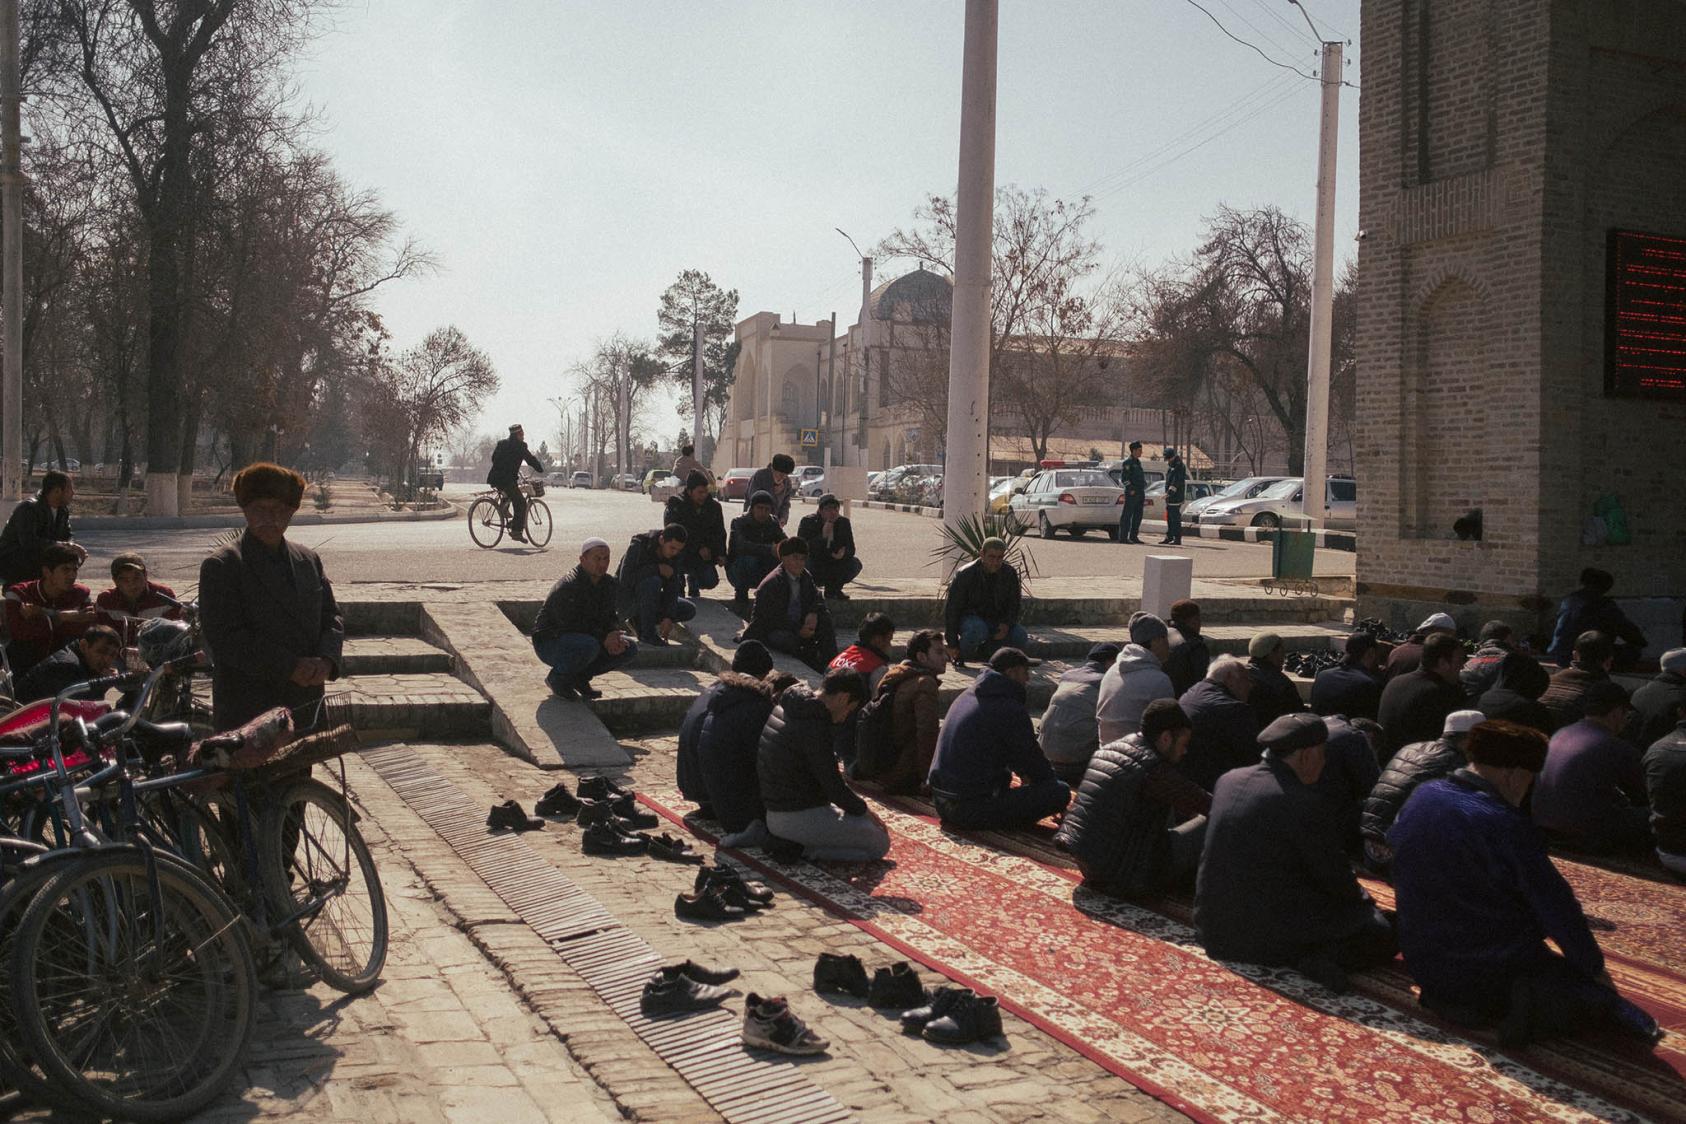 Muslims pray during Friday service in Bukhara, Uzbekistan on Feb. 23, 2018. (Dmitry Kostyukov/The New York Times)